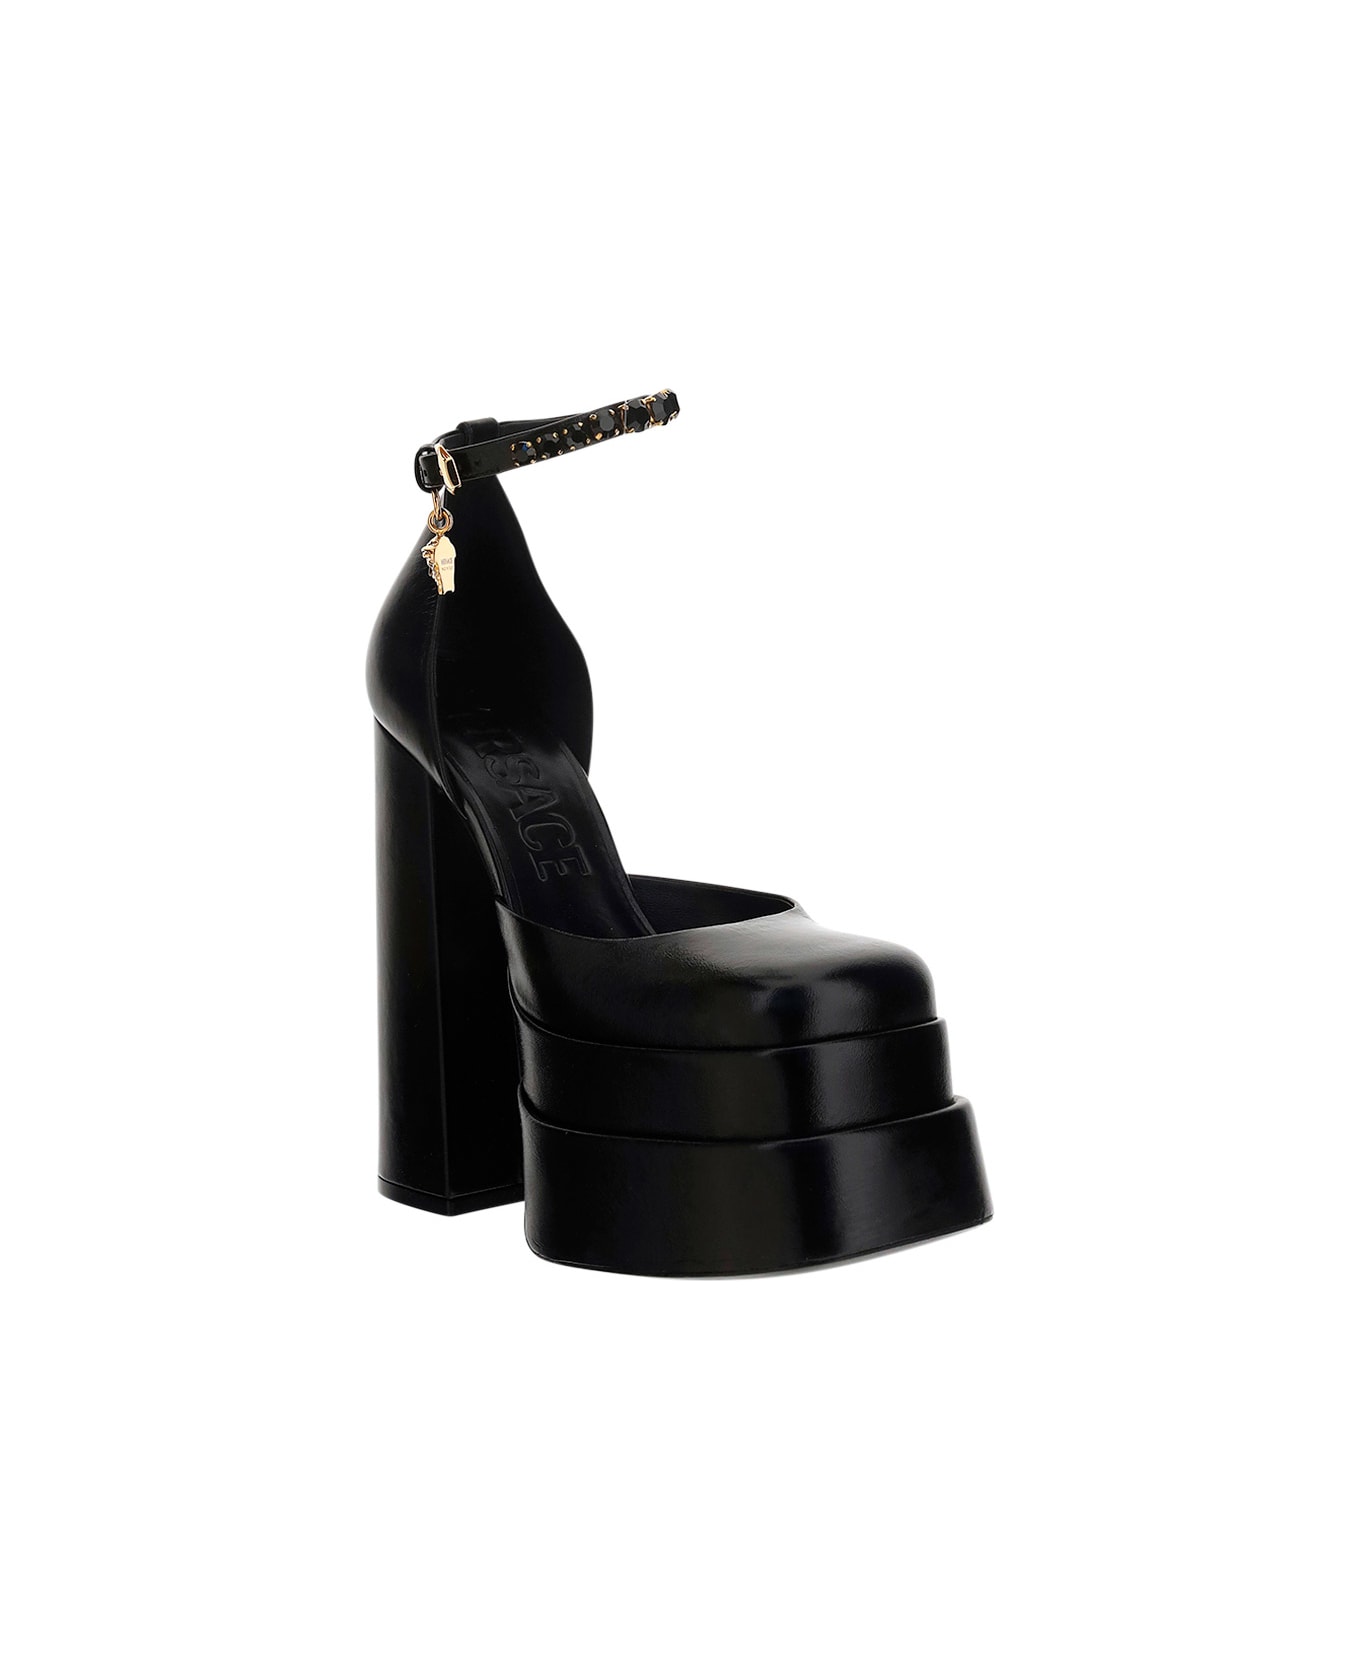 Versace Platform Sandals - Nero/oro Versace